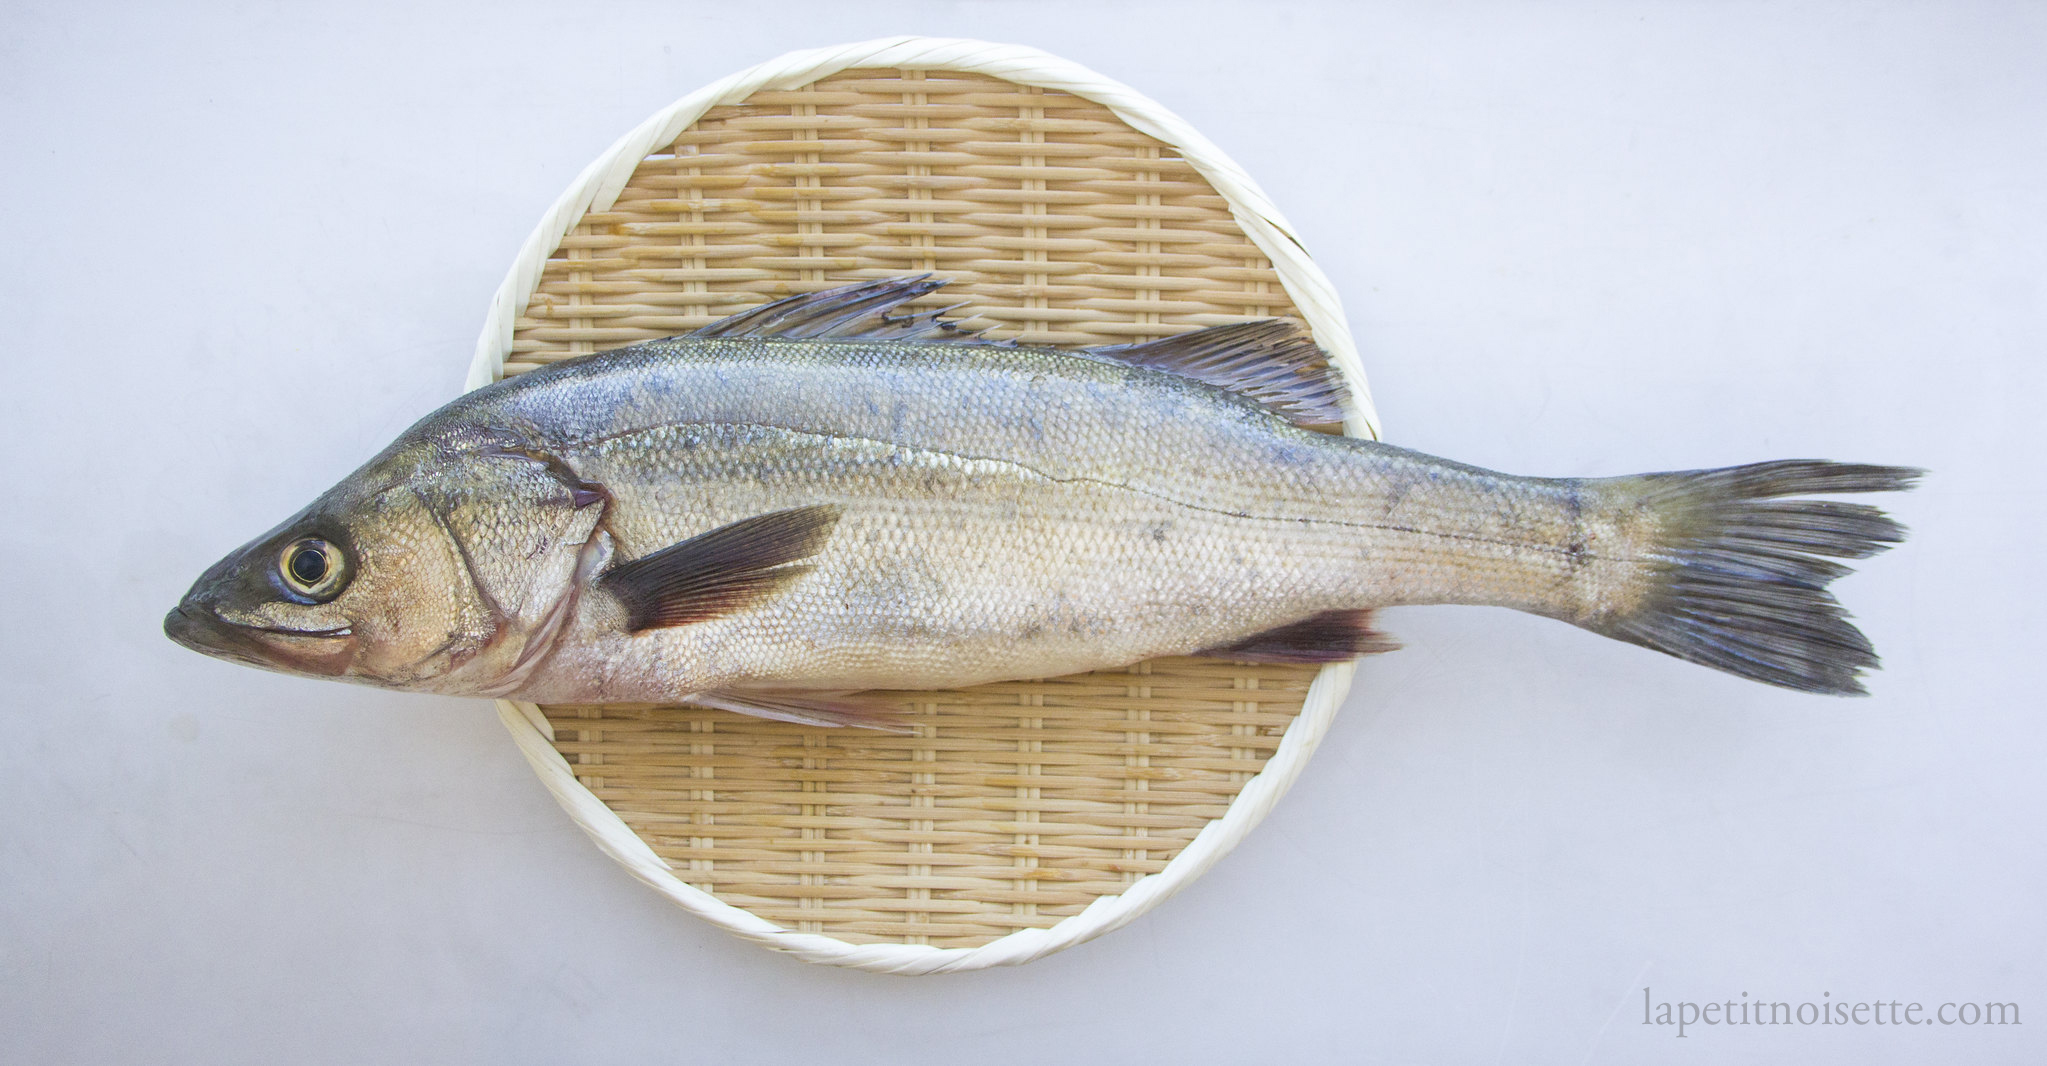 Japanese sea bass called suzuki